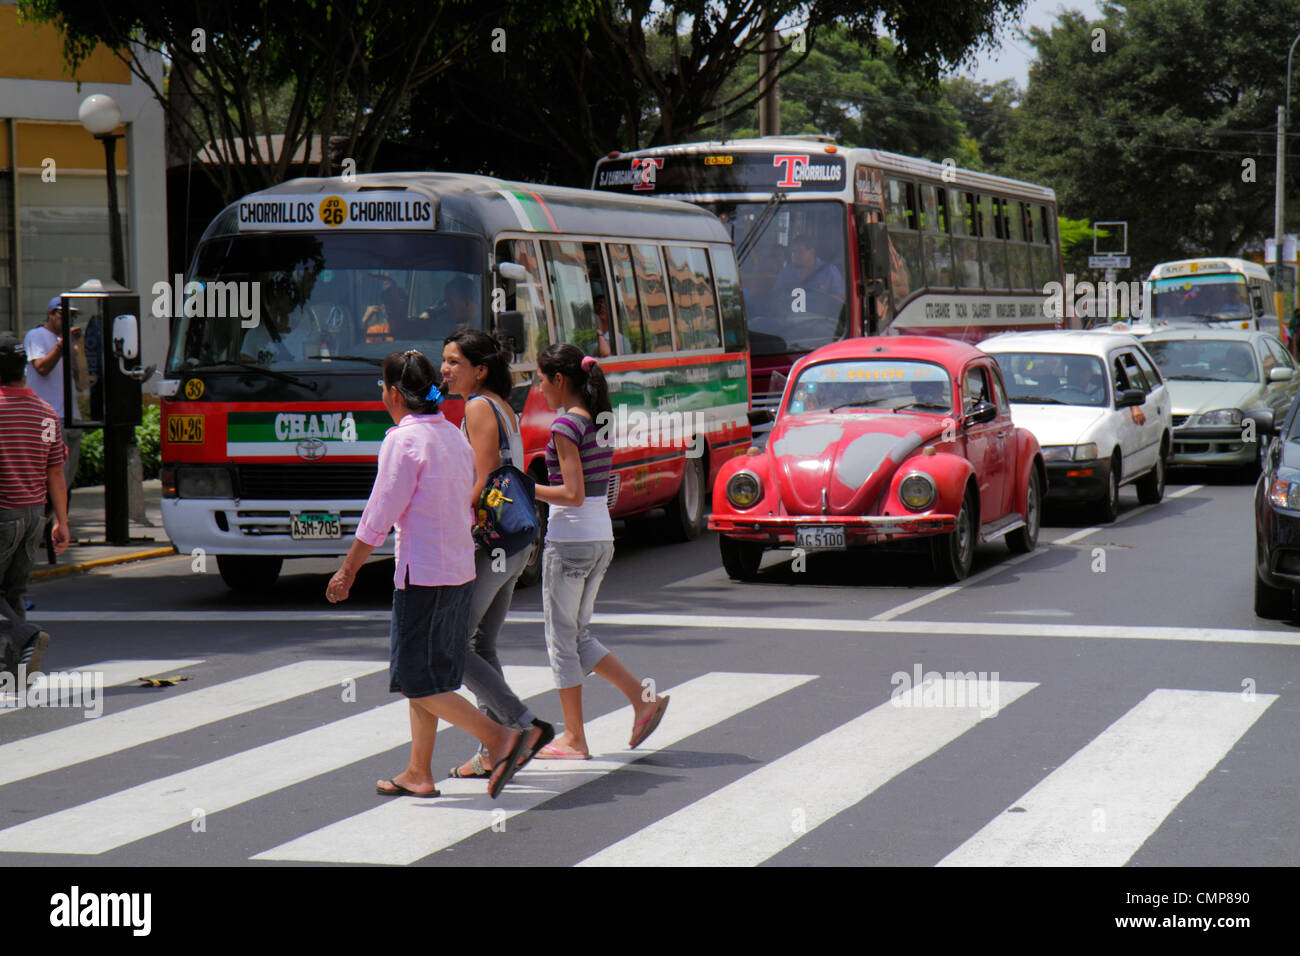 Lima Peru,Barranco District,Avenida Miguel Grau,street scene,red light,stopped traffic,bus,coach,car cars,Volkswagen,crossing,painted lines,Hispanic L Stock Photo